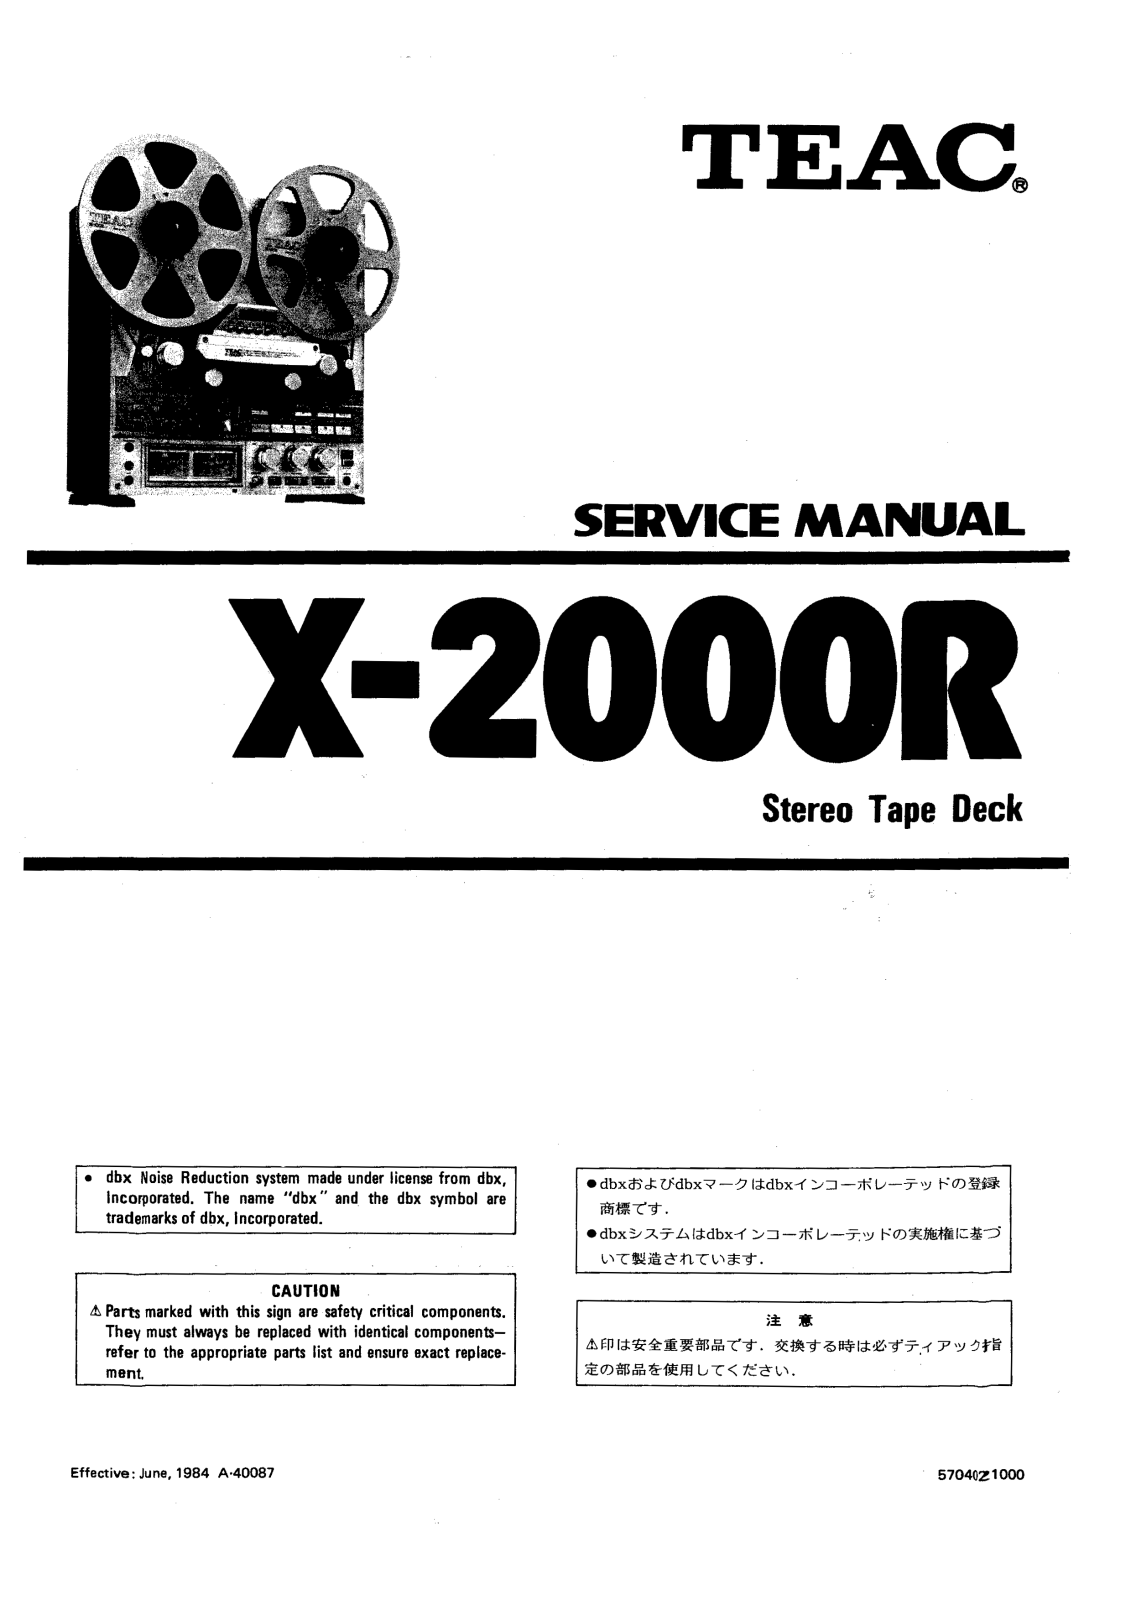 Teac x2000r Service Manual